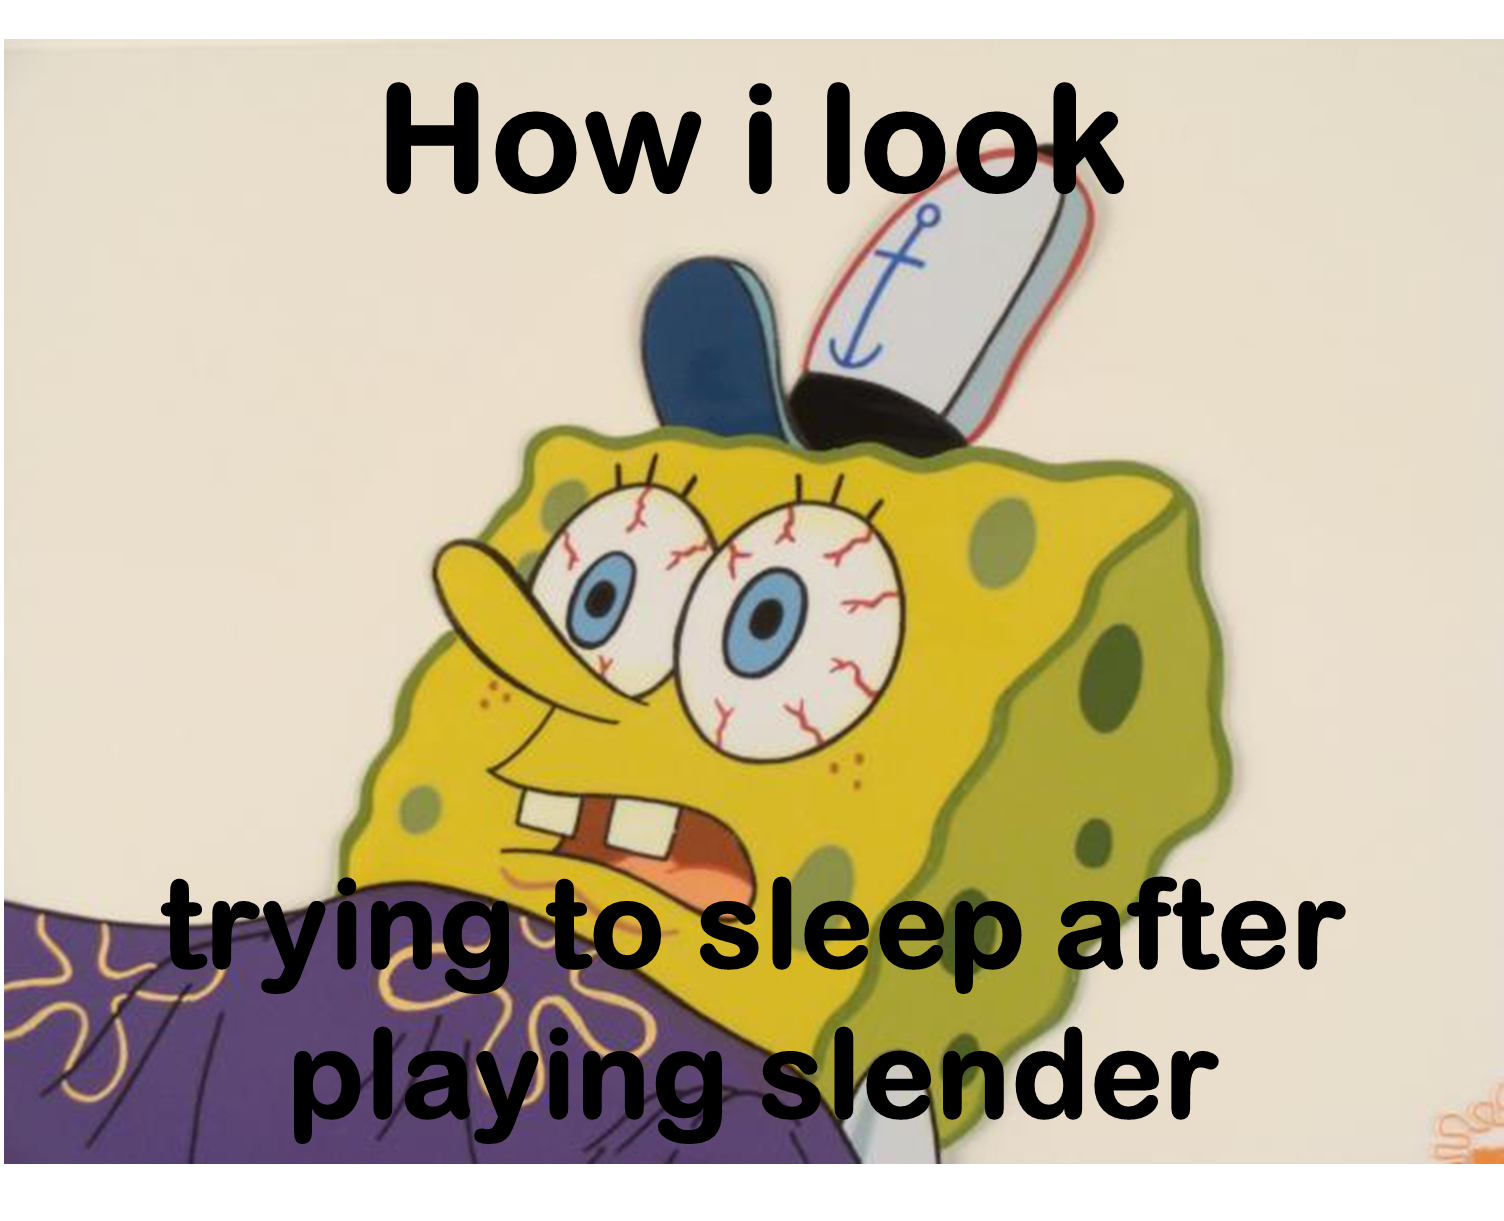 Spongebob played Slender